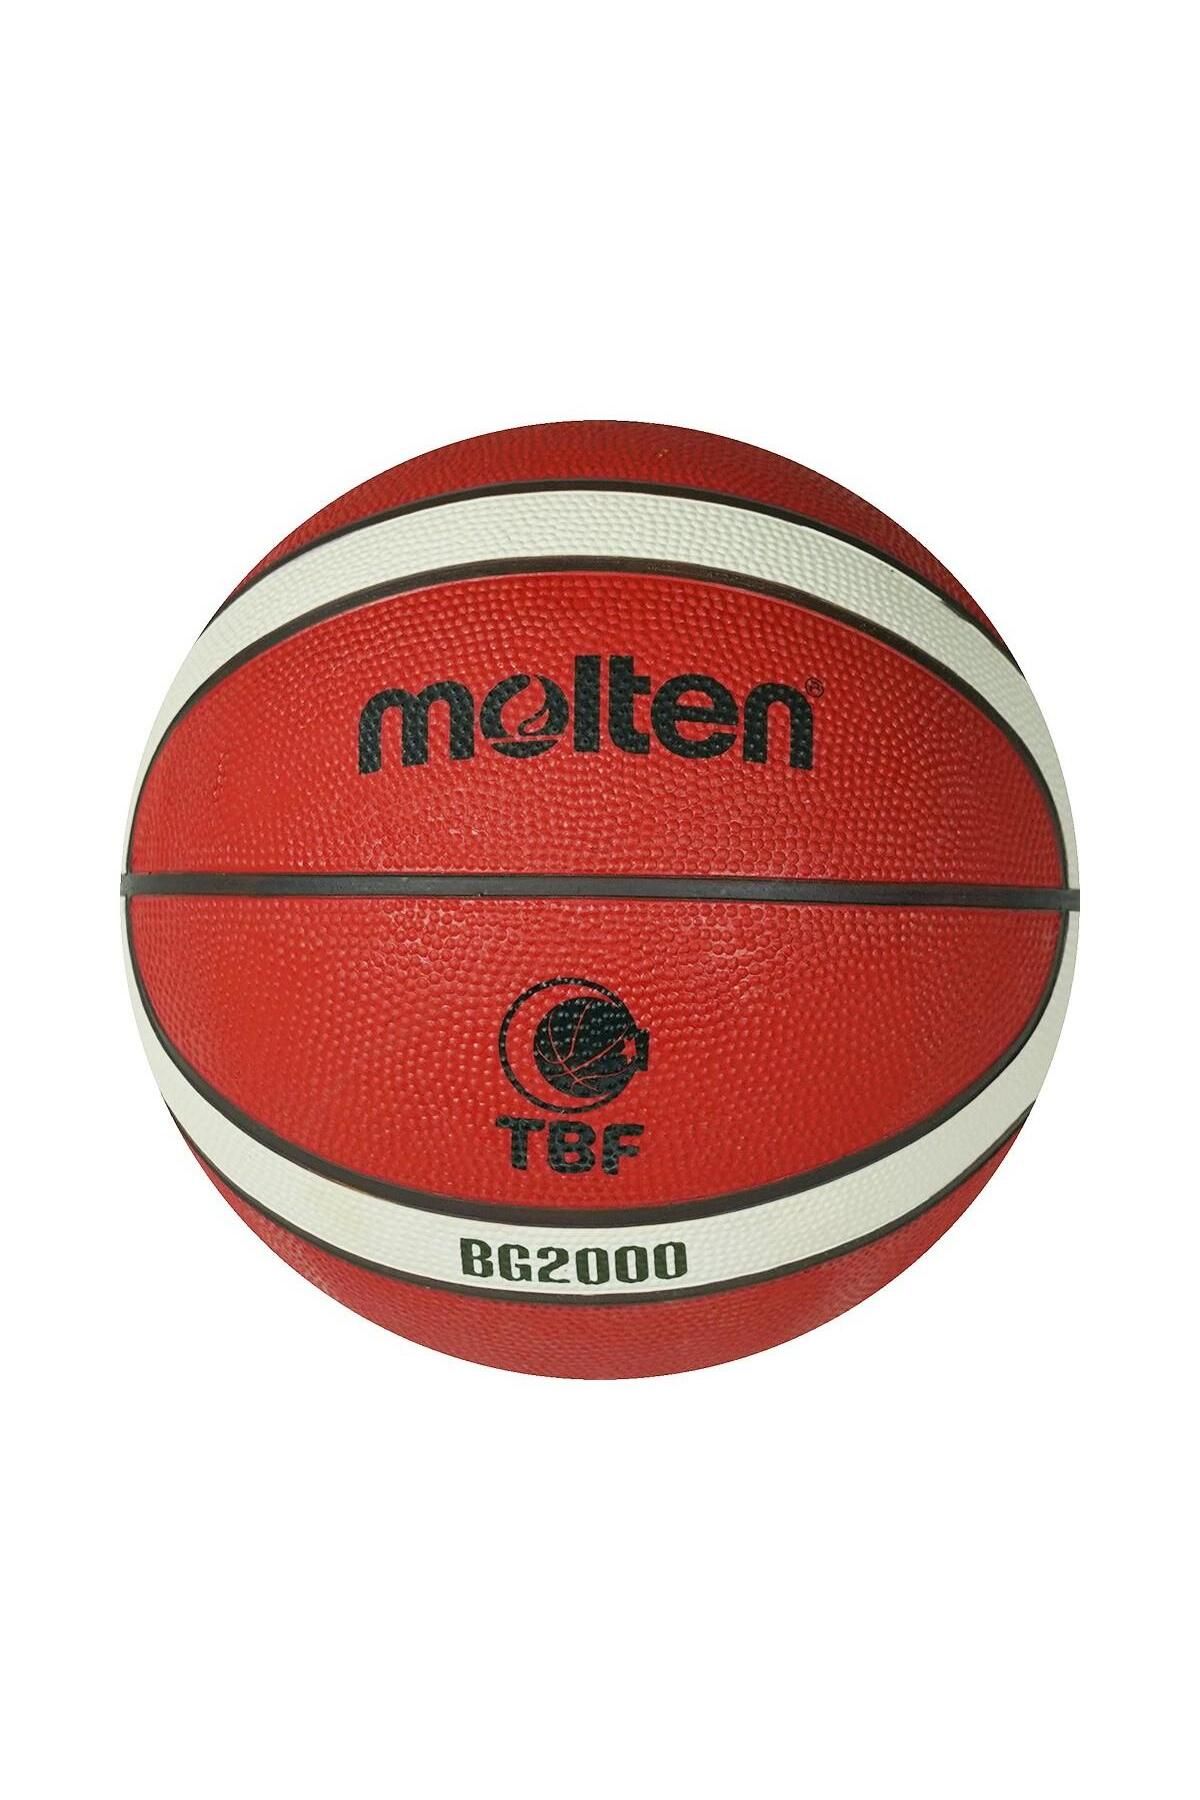 Molten B7g2000 Basketbol Topu 7